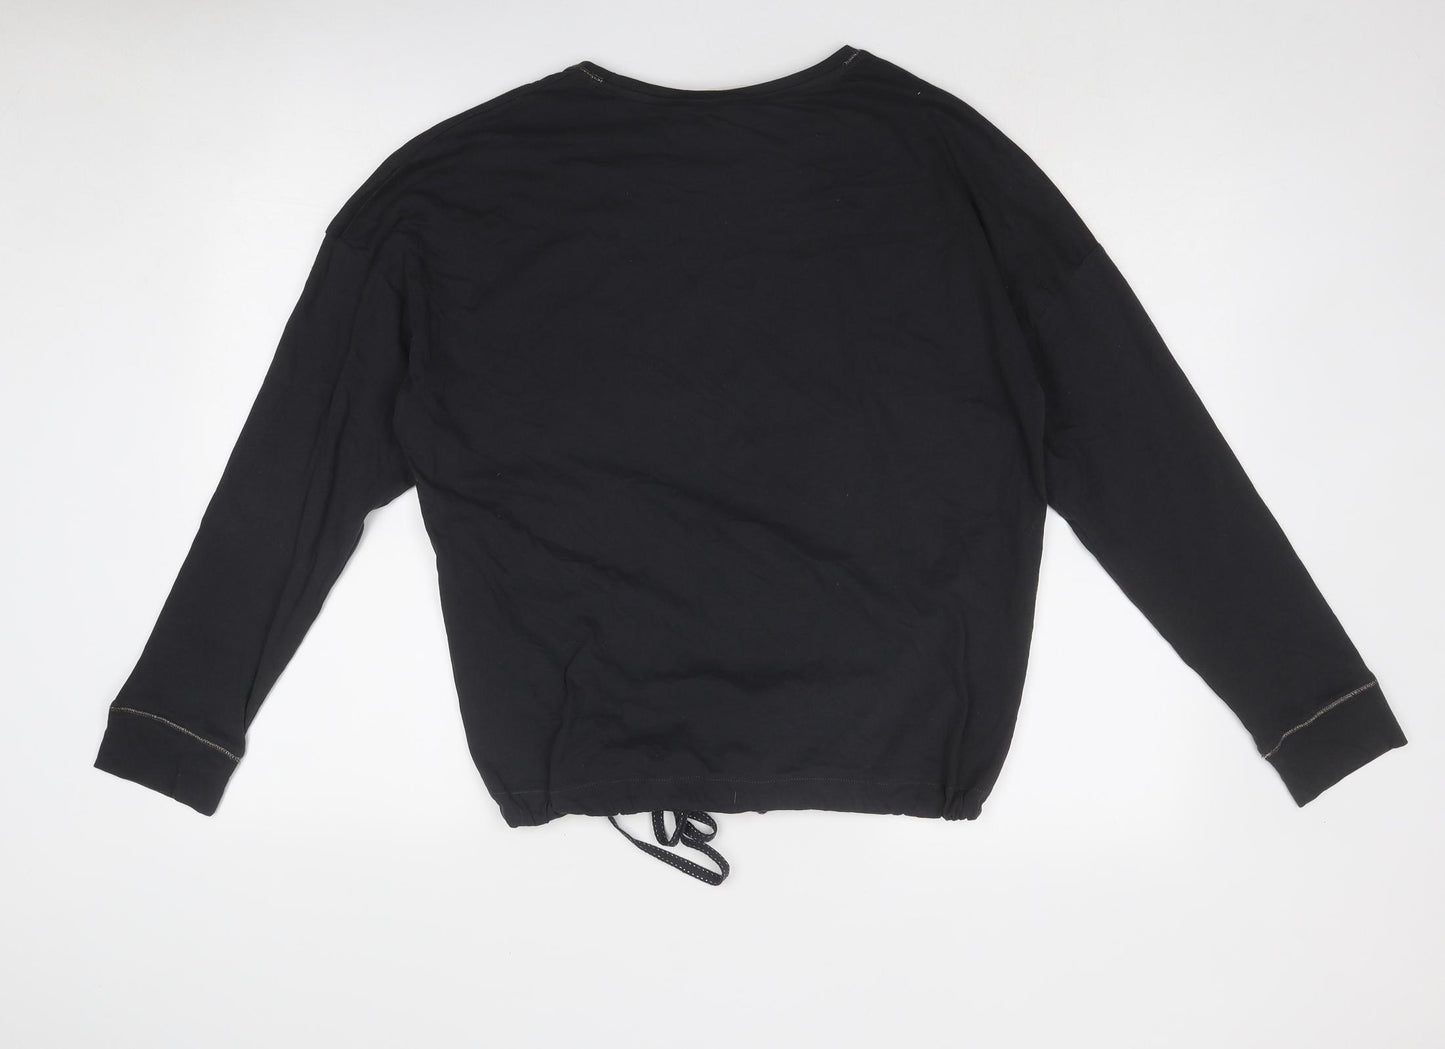 Marks and Spencer Womens Black Cotton Basic T-Shirt Size L Boat Neck - Disco Ho-Ho